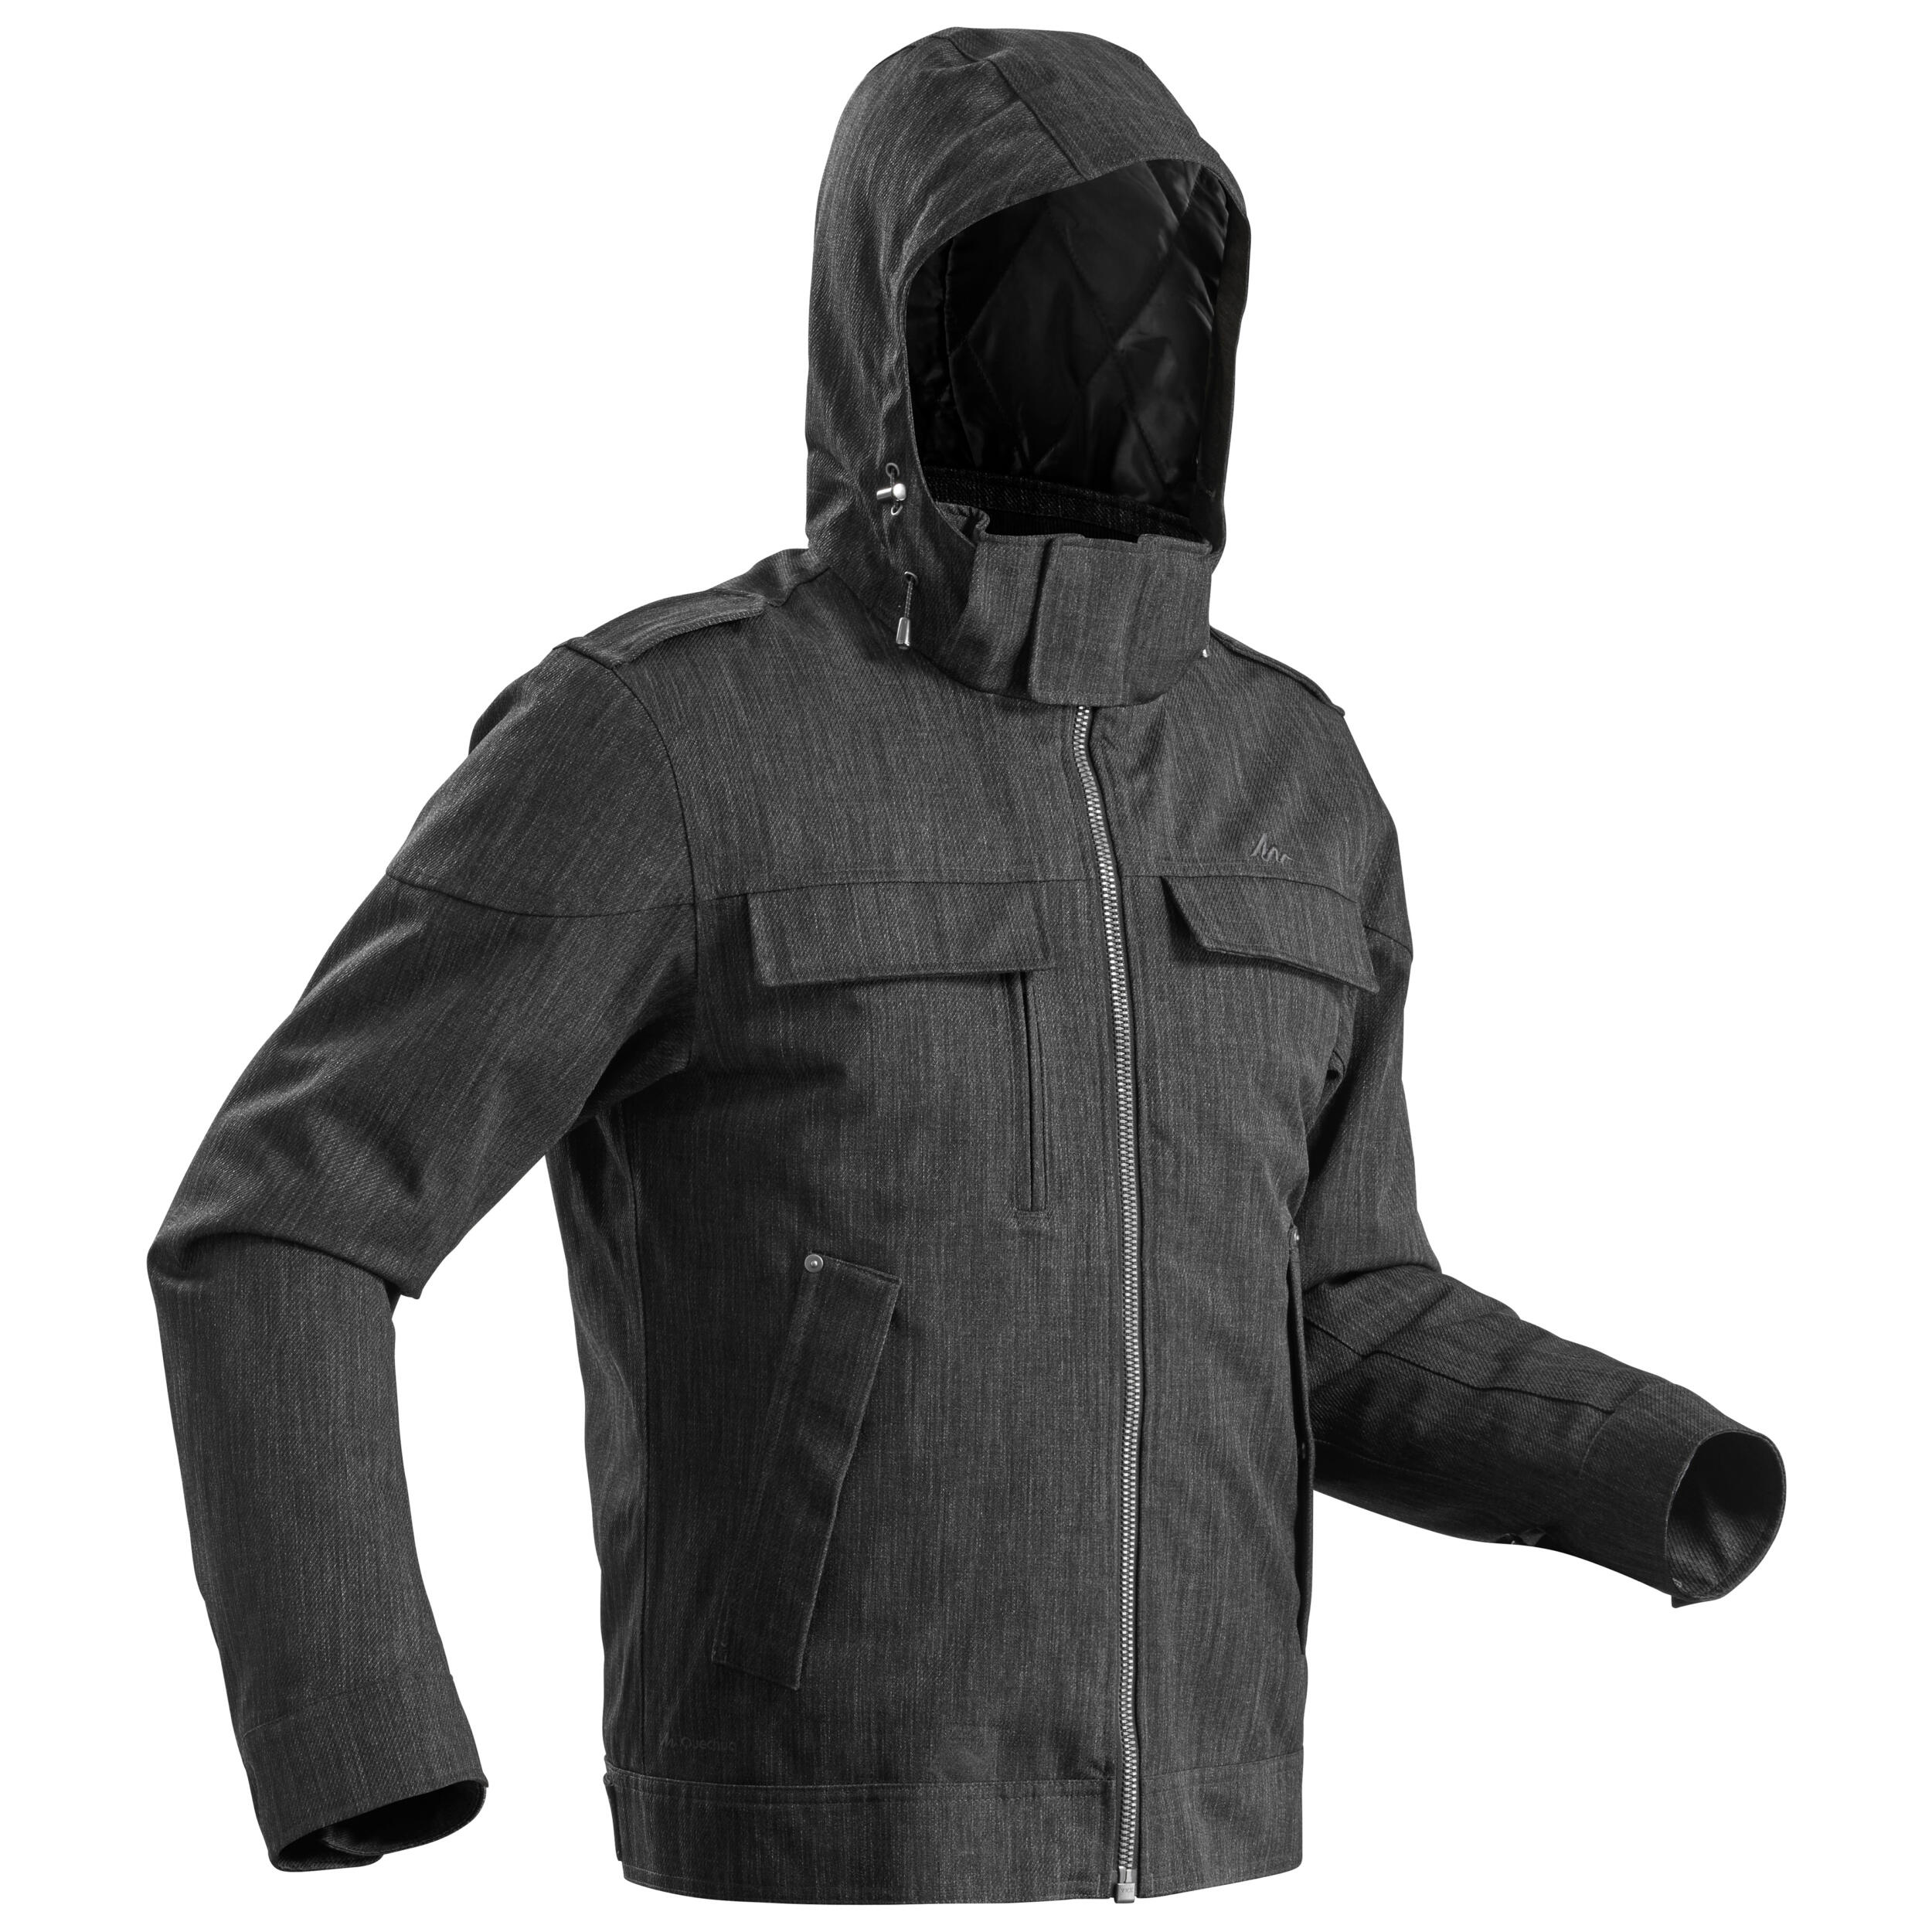 decathlon jacket waterproof